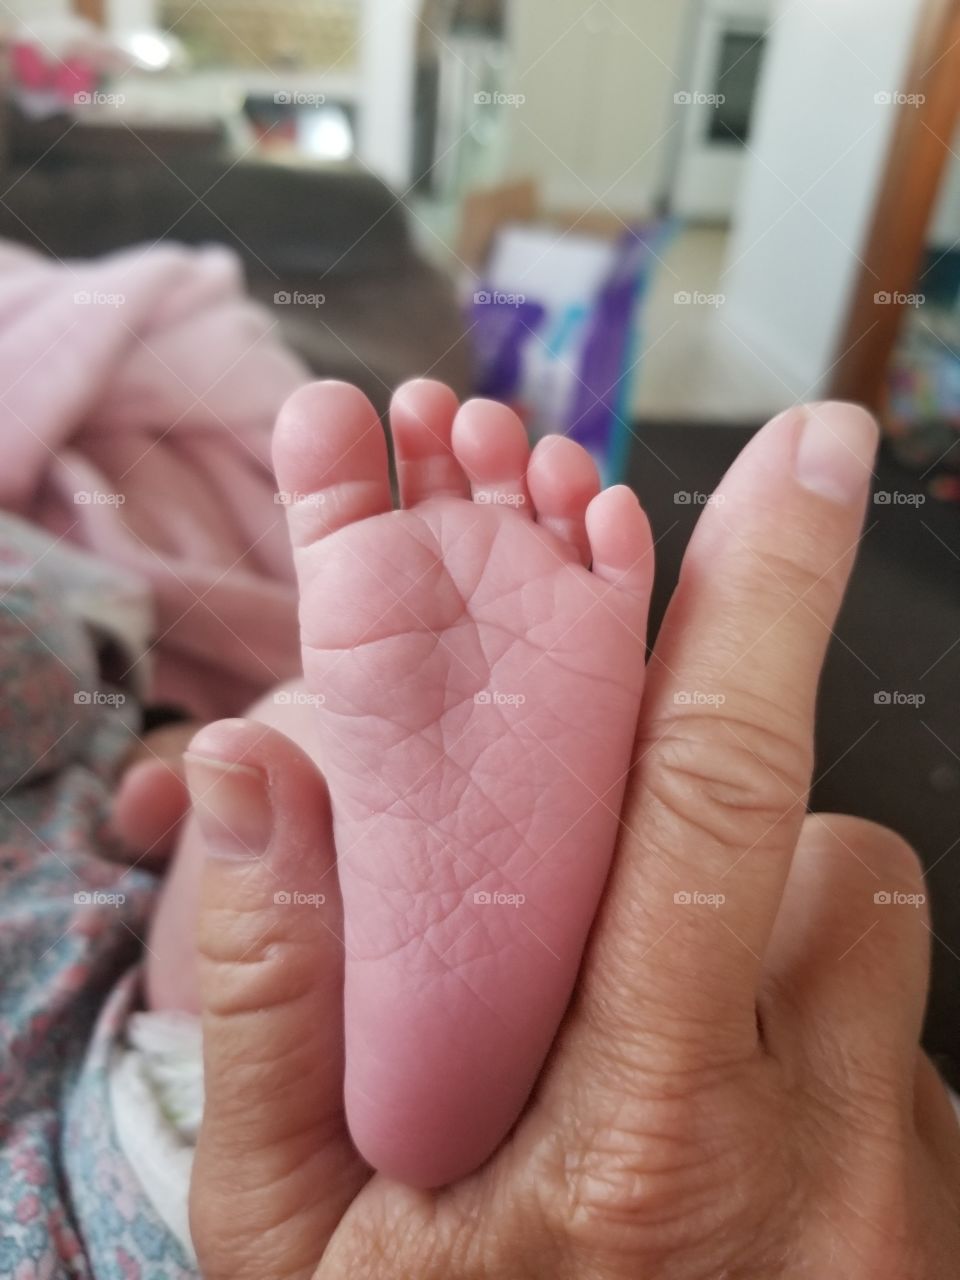 baby foot